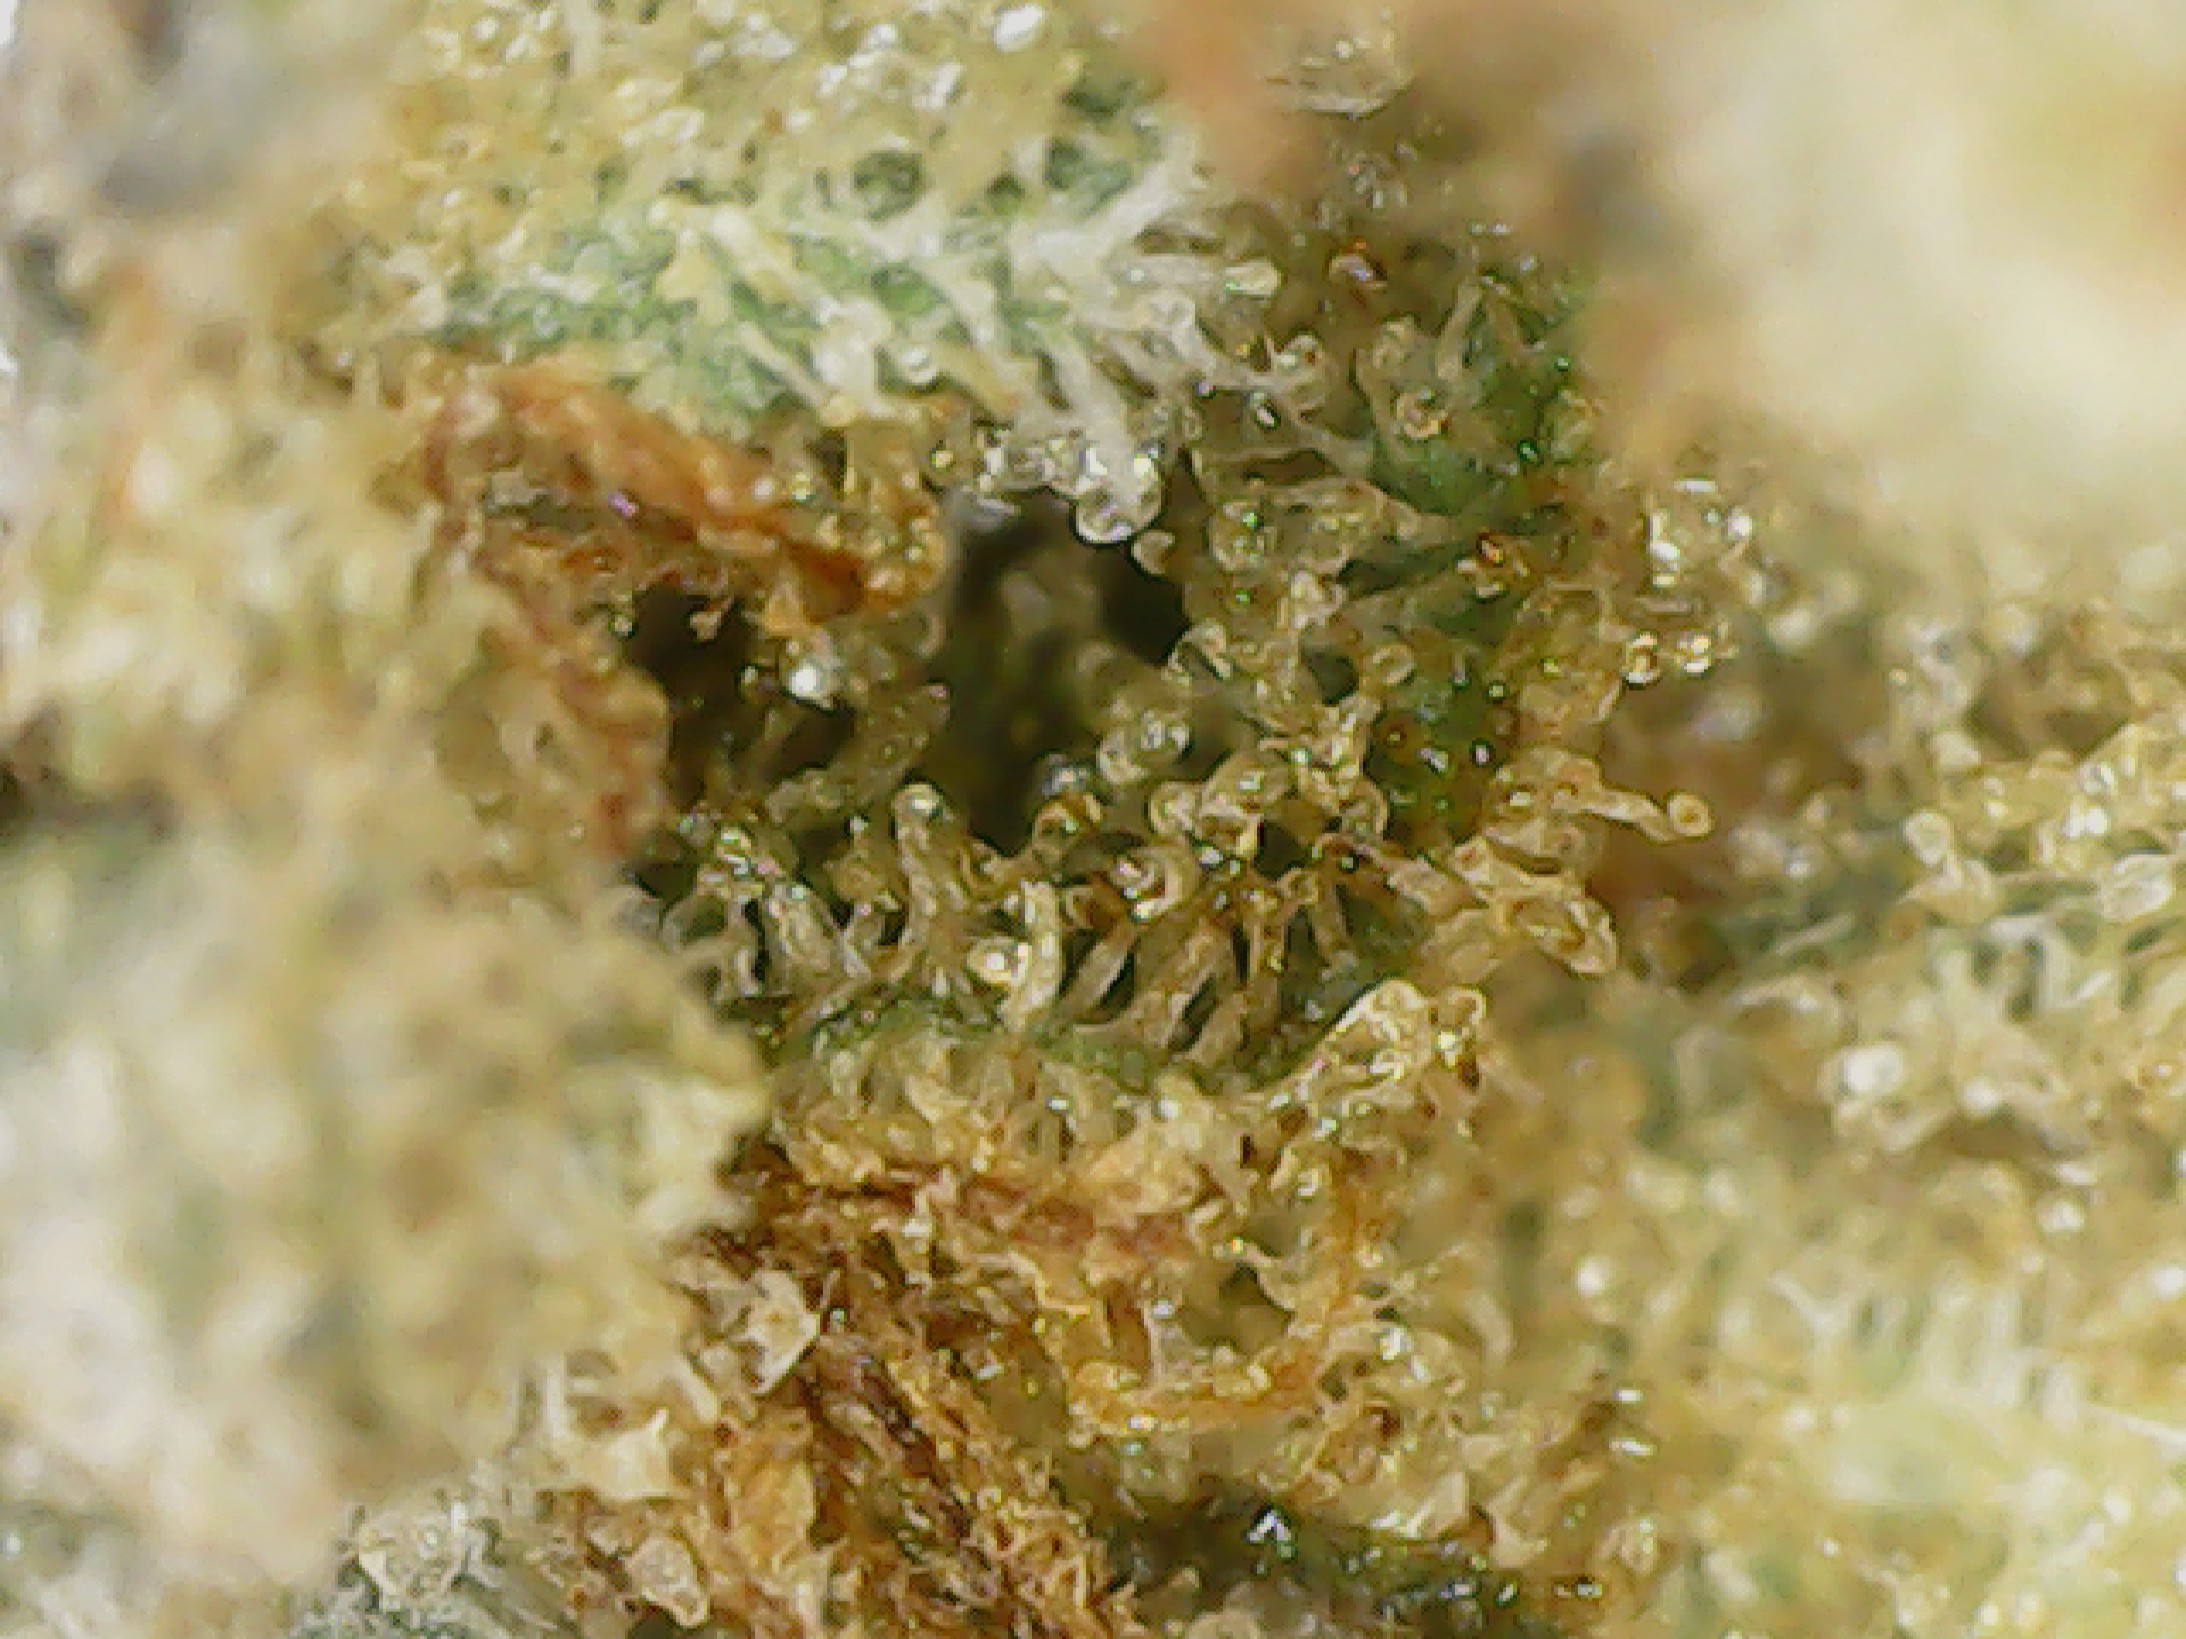 Atlantic Glue GG4 by Reef Organic Cannabis Indica Cultivar Photos Weed Strain Review by Stash Magazine Canada's Cannabis Lookbook Volume 3 - stashmagazine.ca